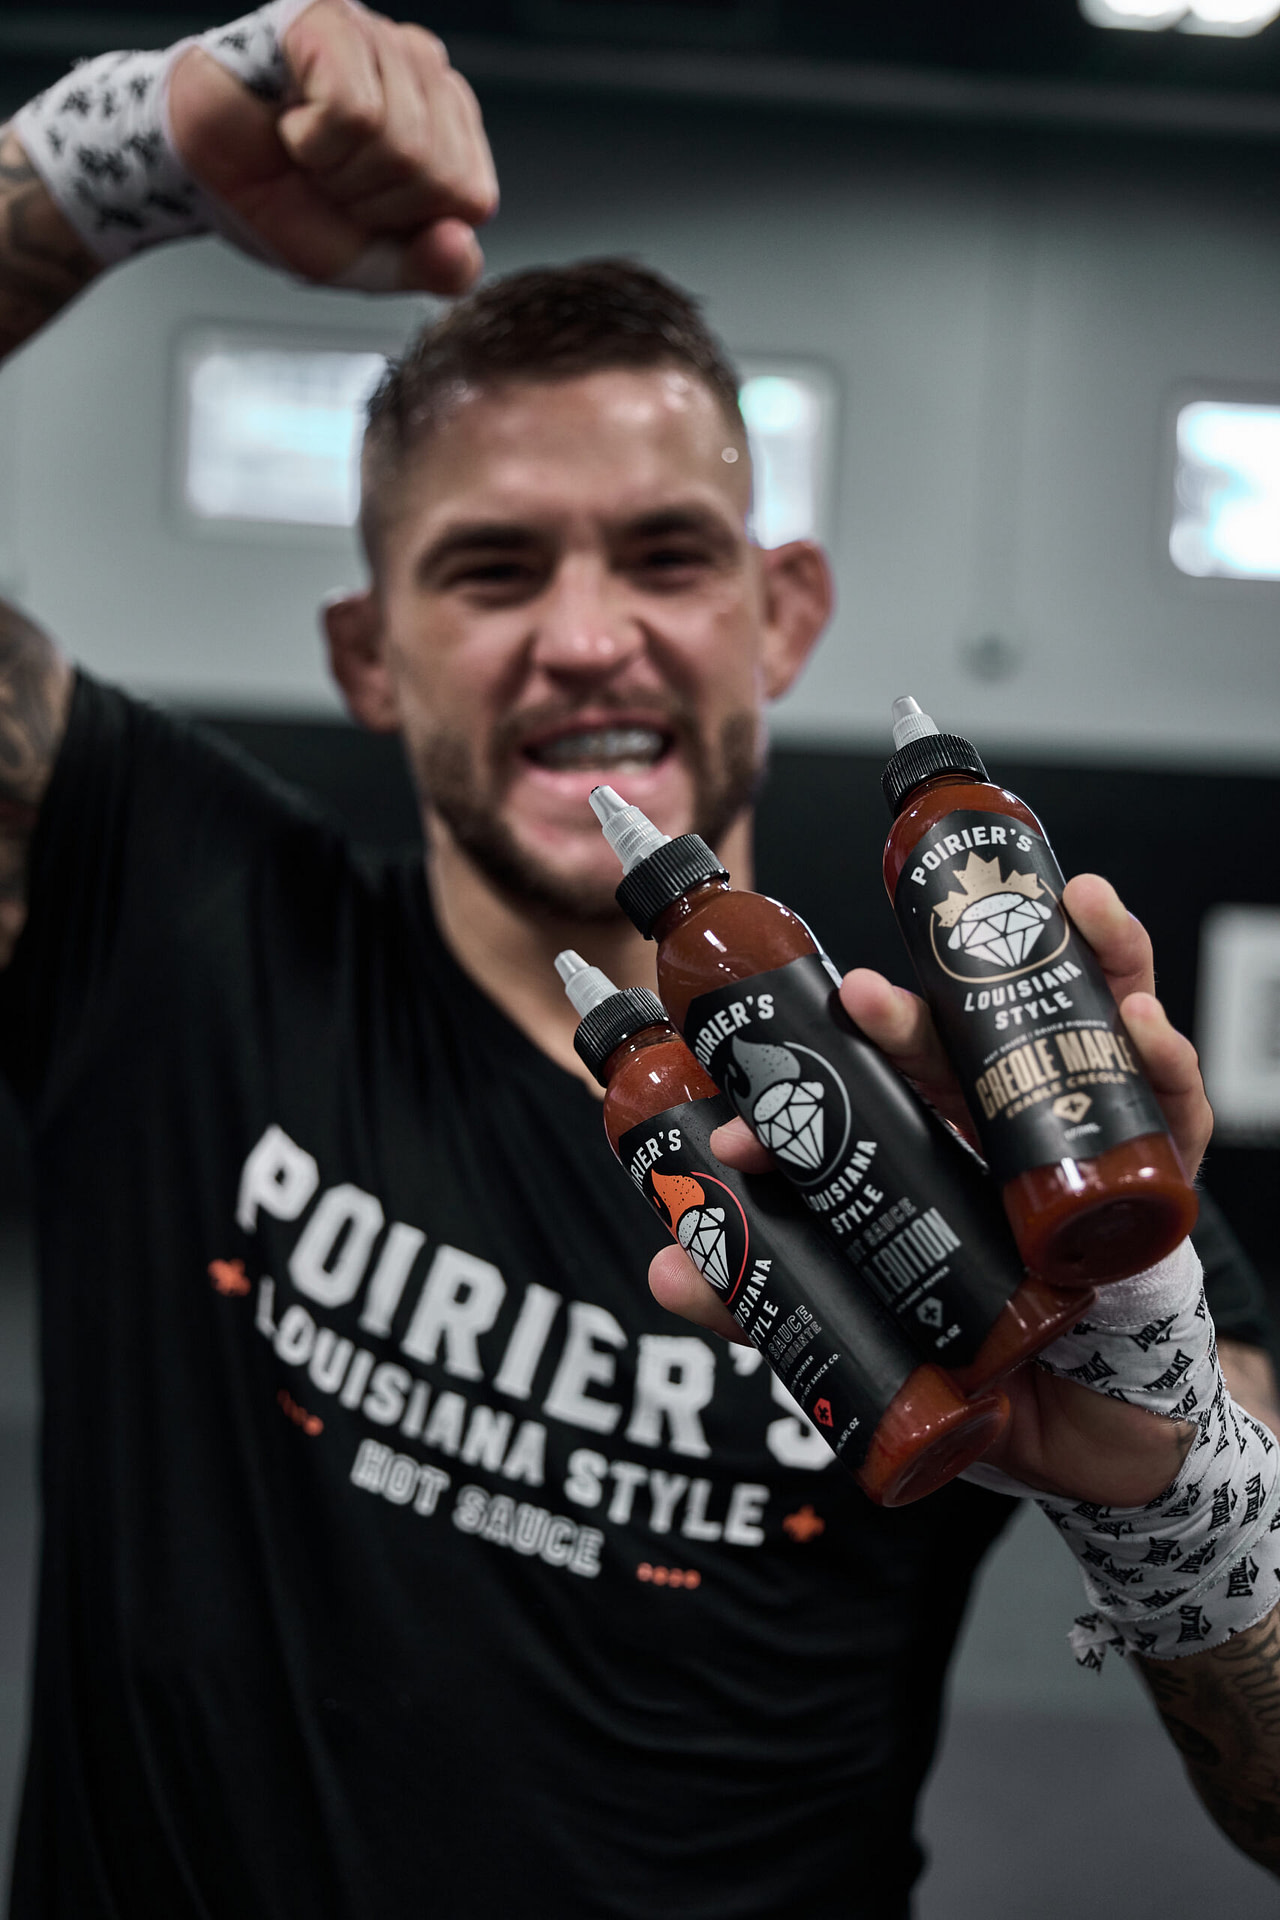 Poirier’s Louisiana Style Named Official Hot Sauce of UFC